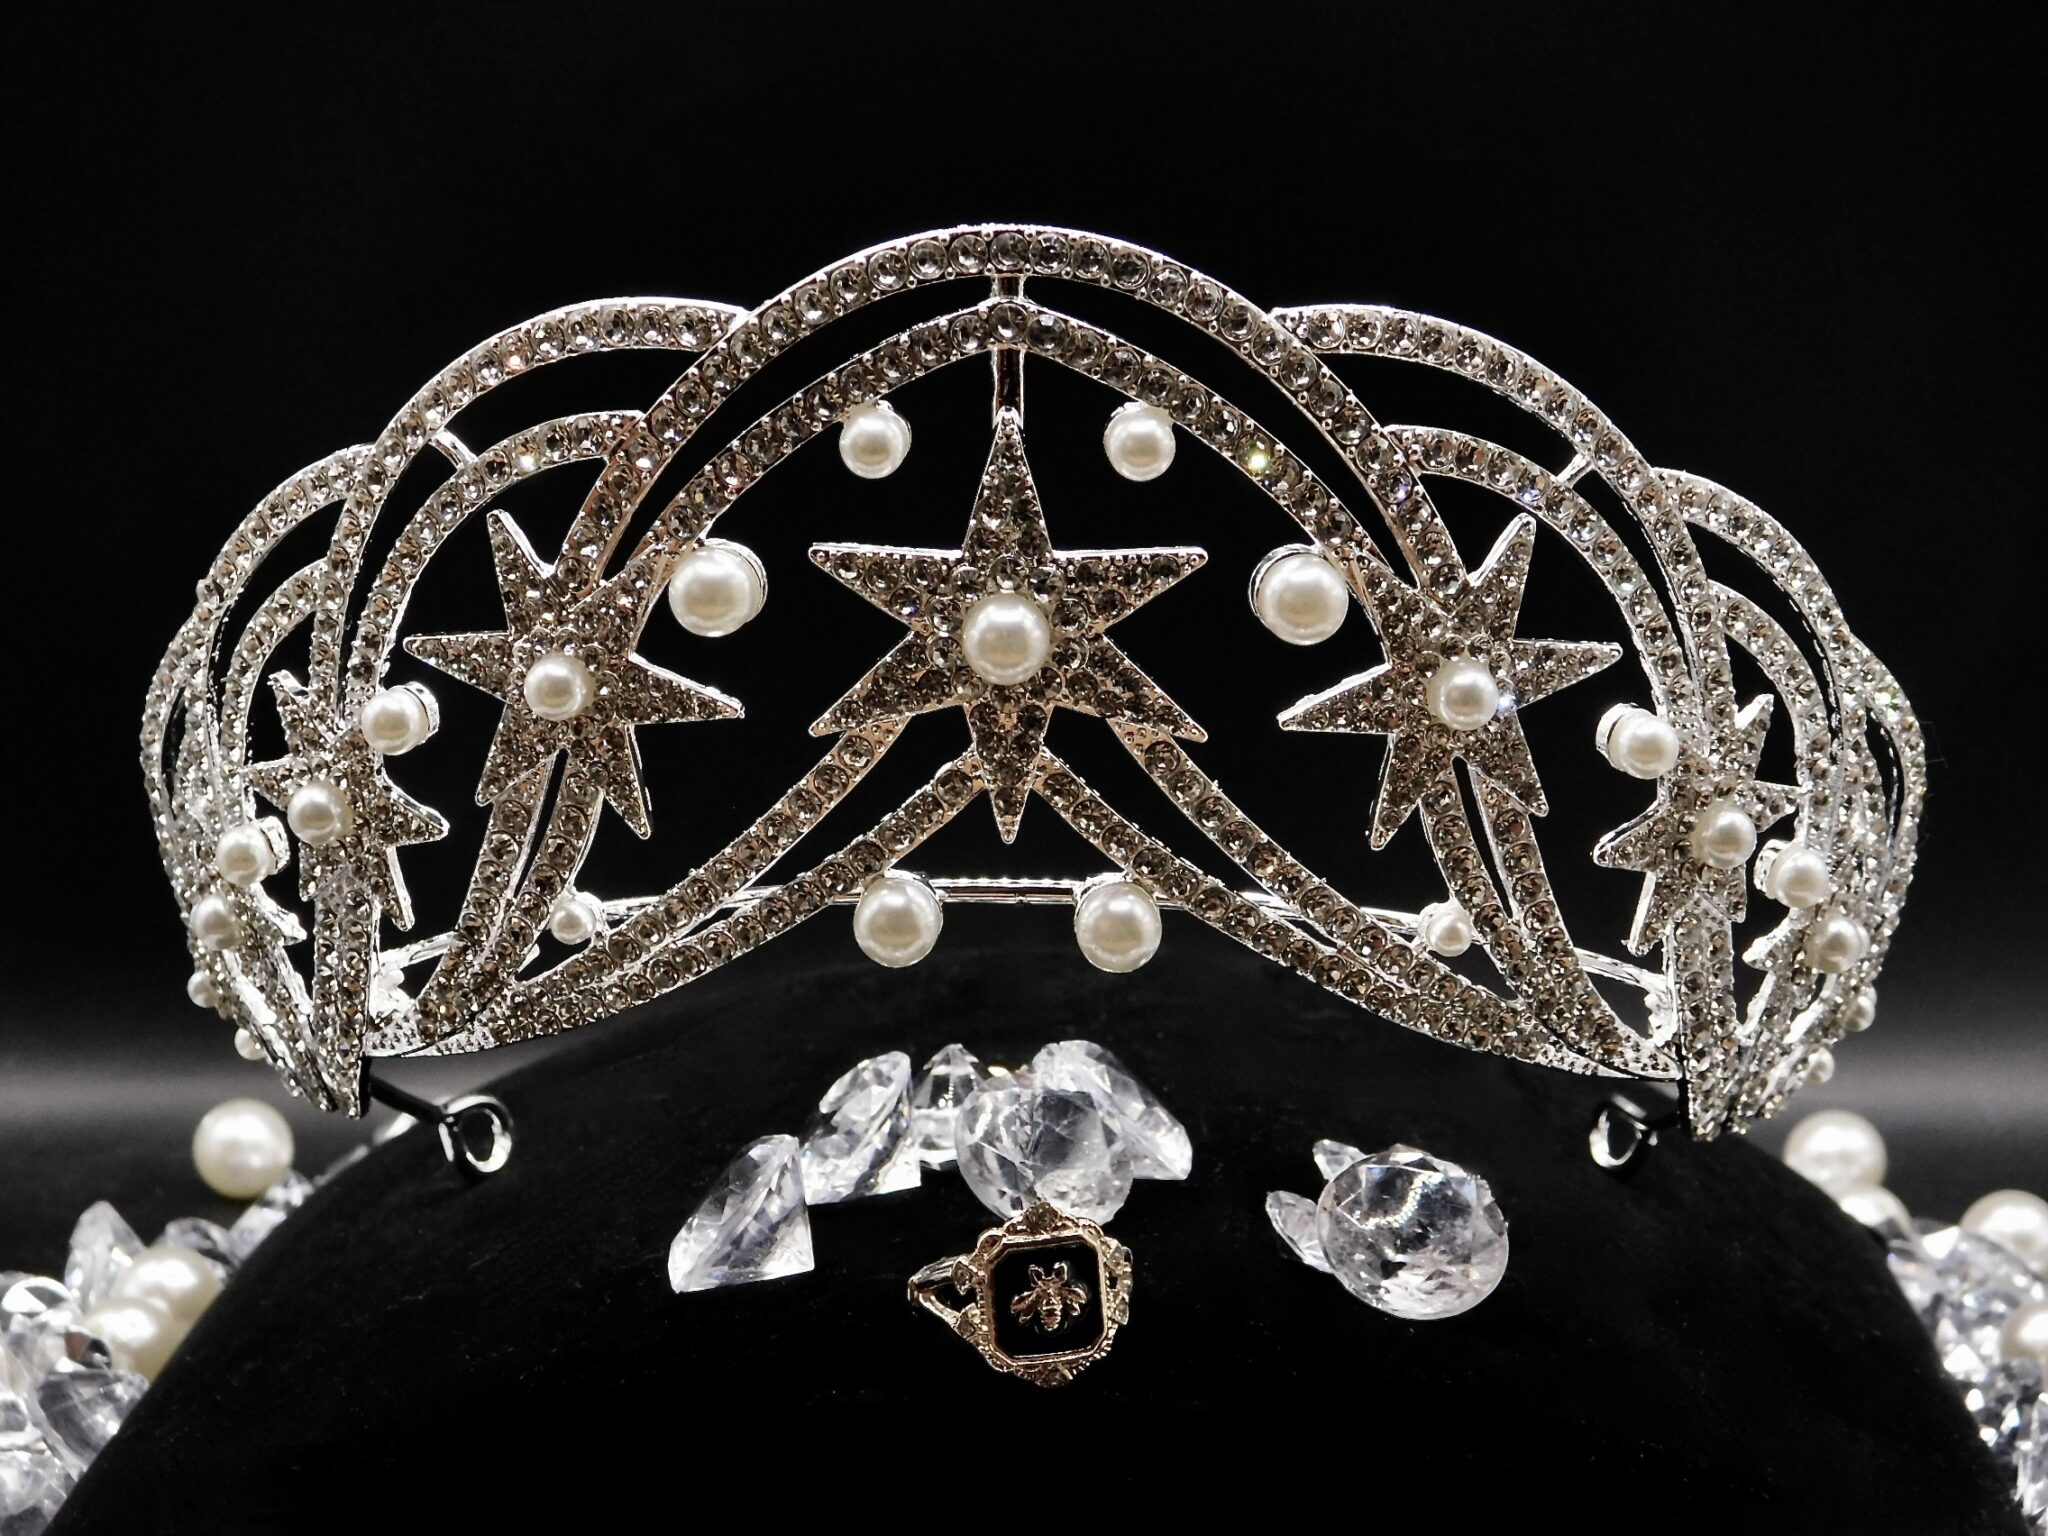 Hesse Star Tiara Replica Queen Bee Crown Company